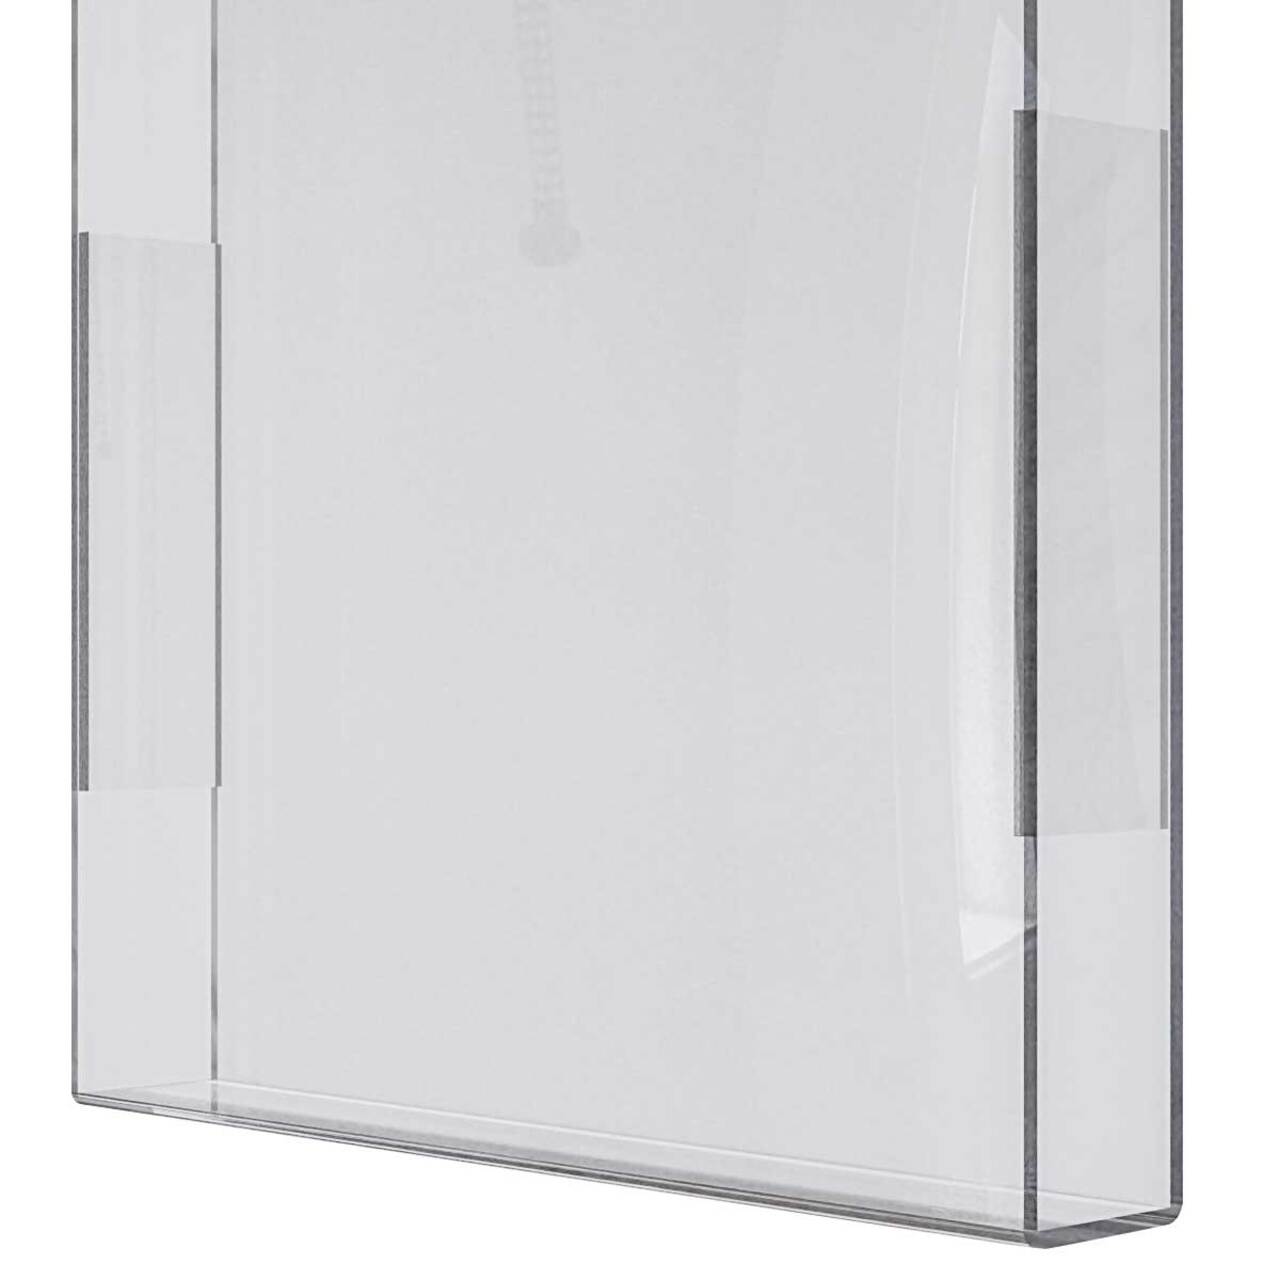 Wall Leaflet Dispenser A4, JJ DISPLAYS, 210 x 297 mm, Portrait